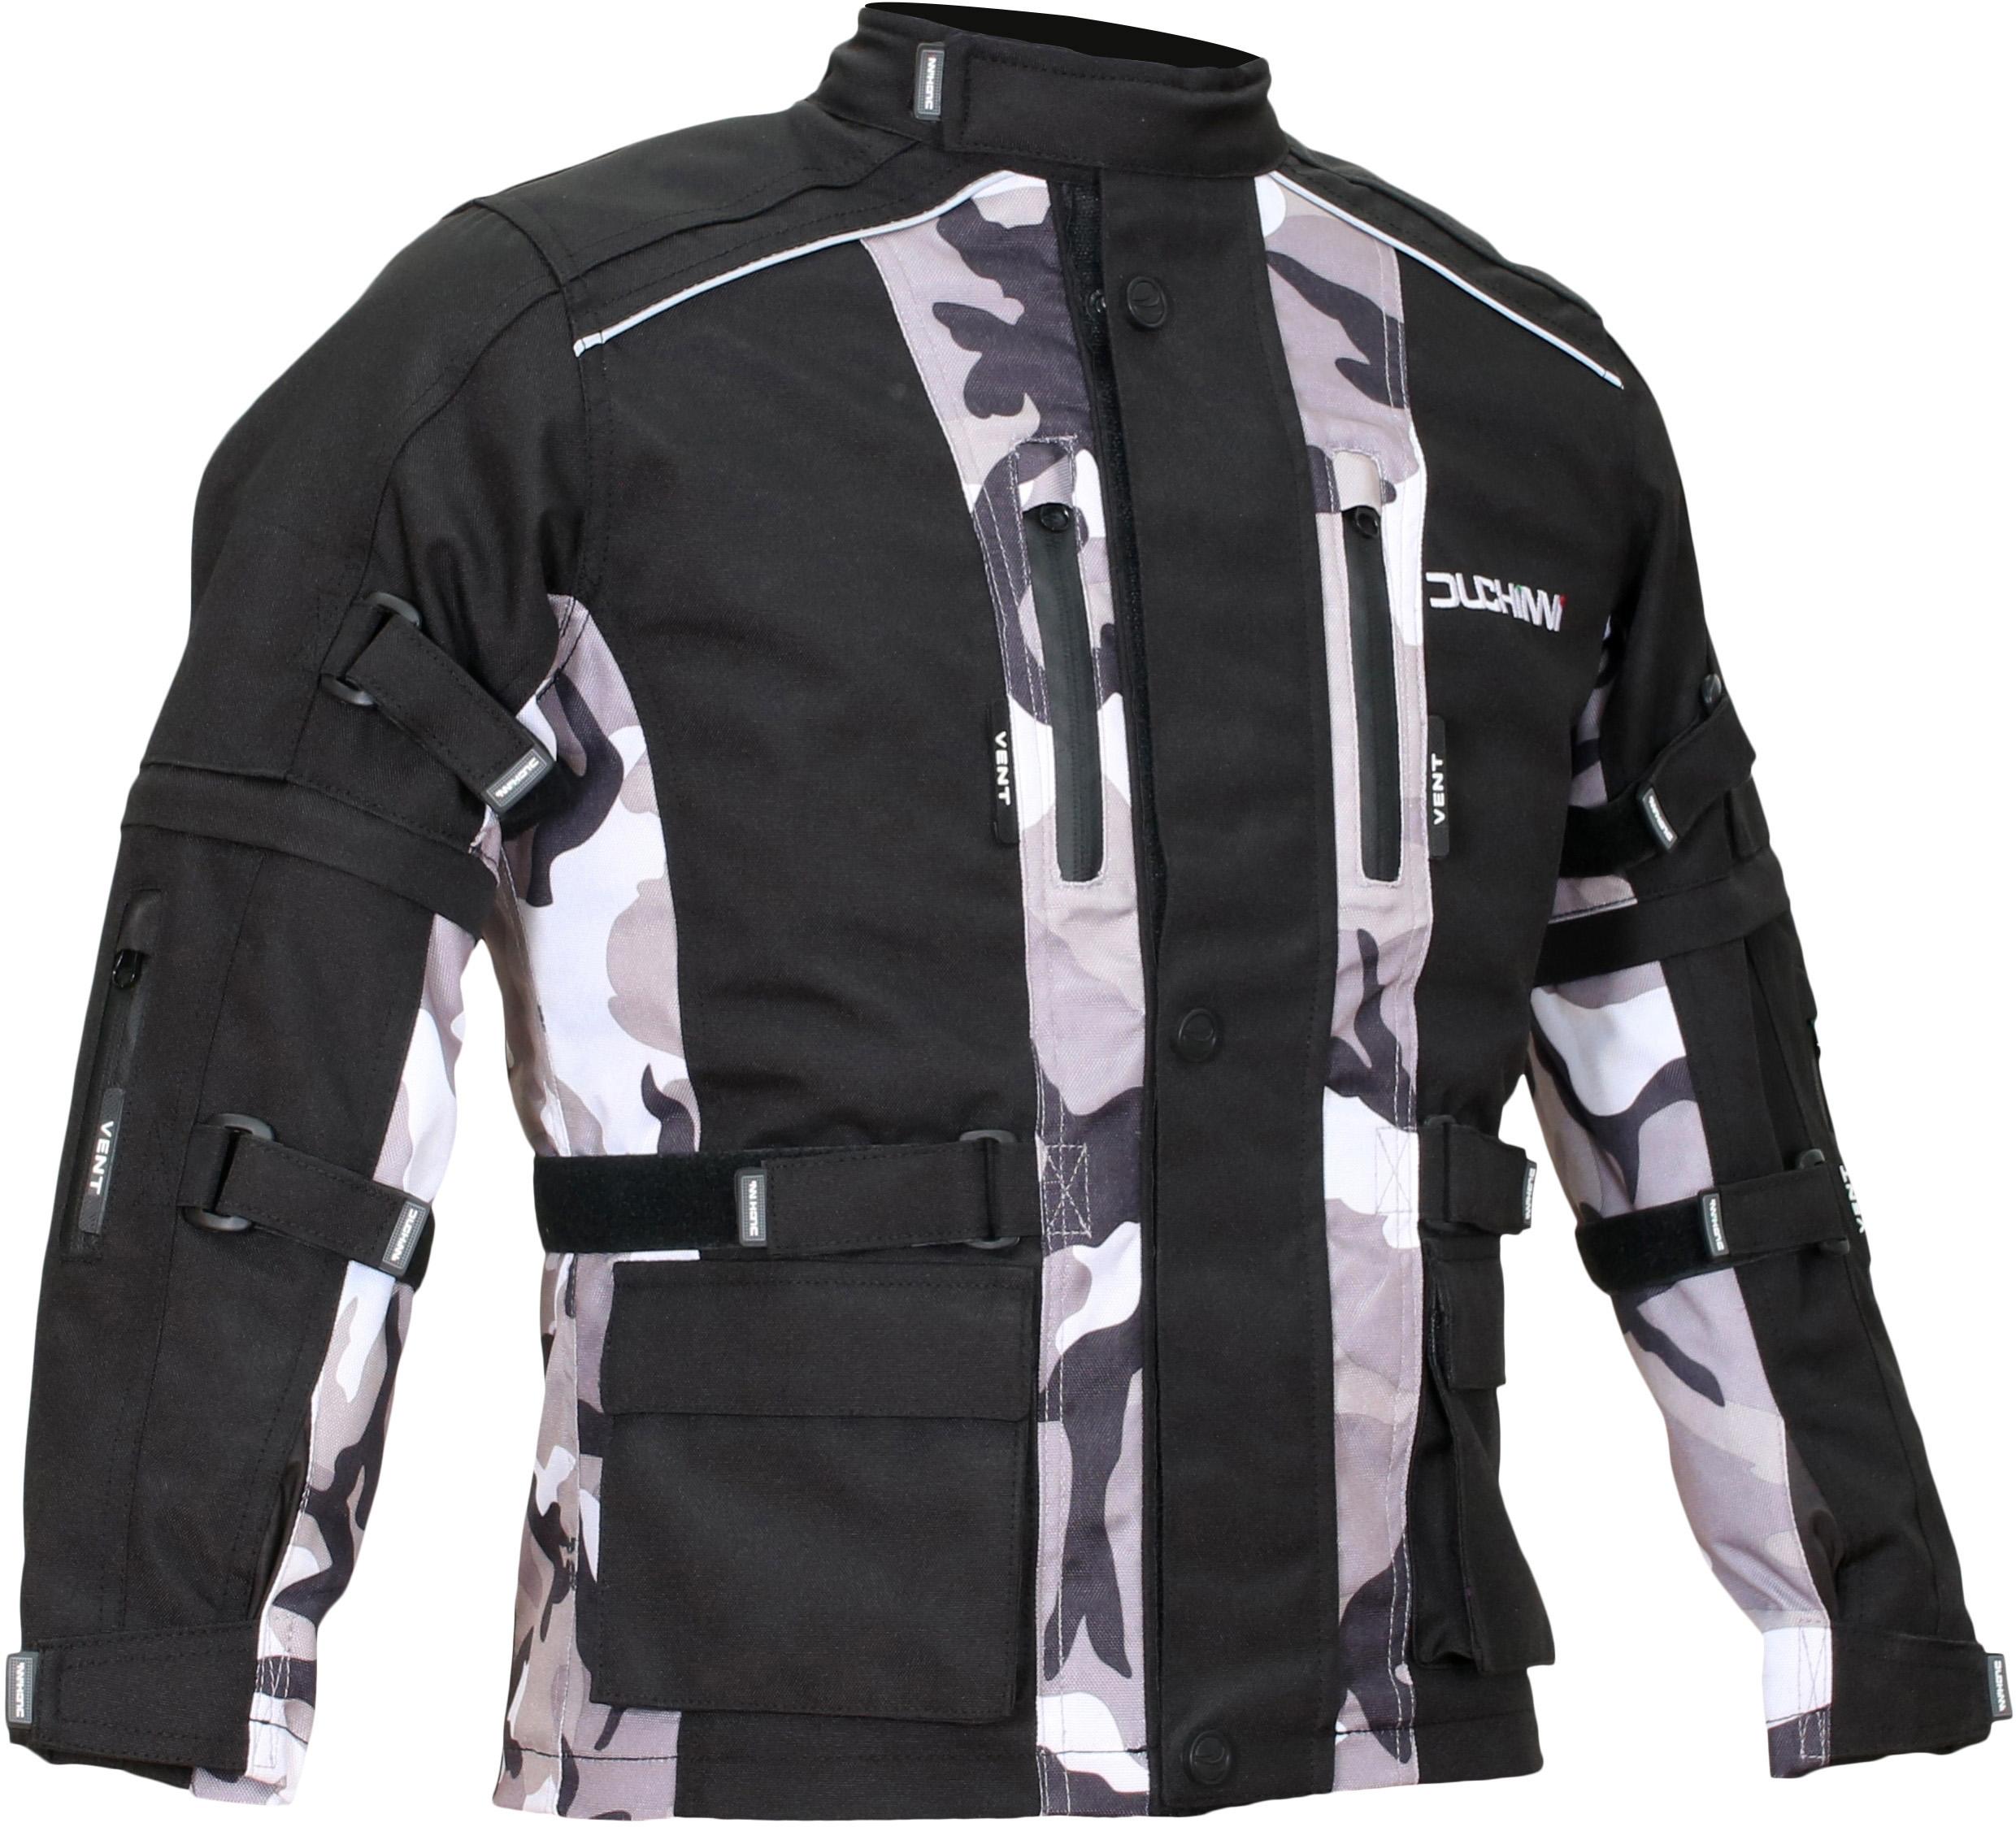 Duchinni Jago Youth Motorcycle Jacket - Black And Camo, S